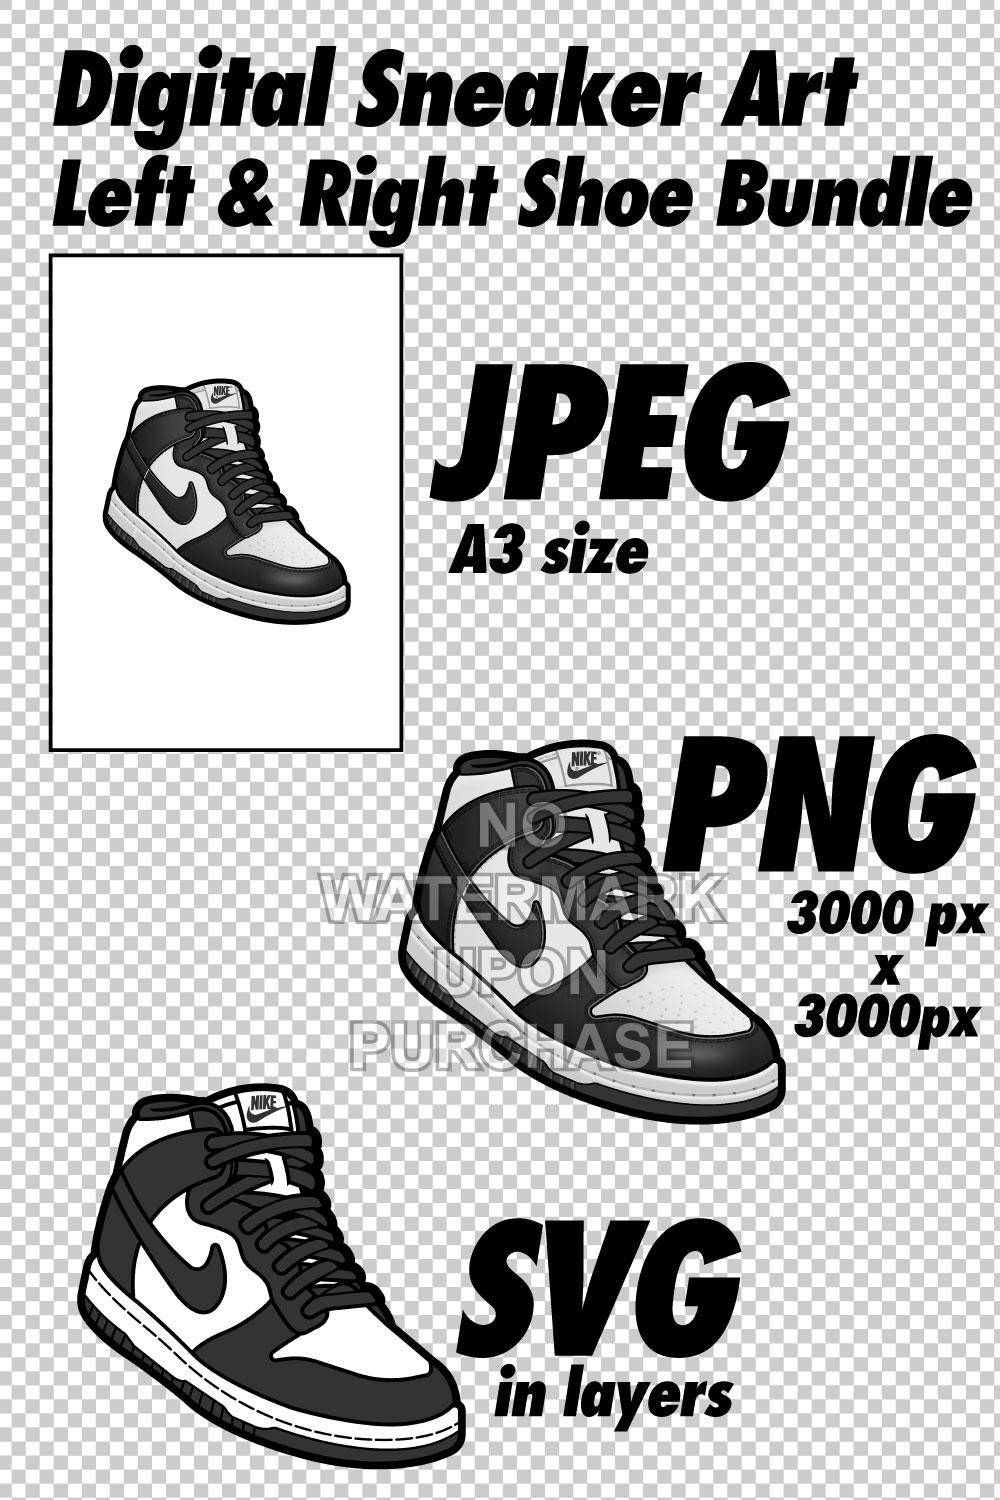 Dunk High Panda JPEG PNG SVG right & left shoe bundle pinterest preview image.